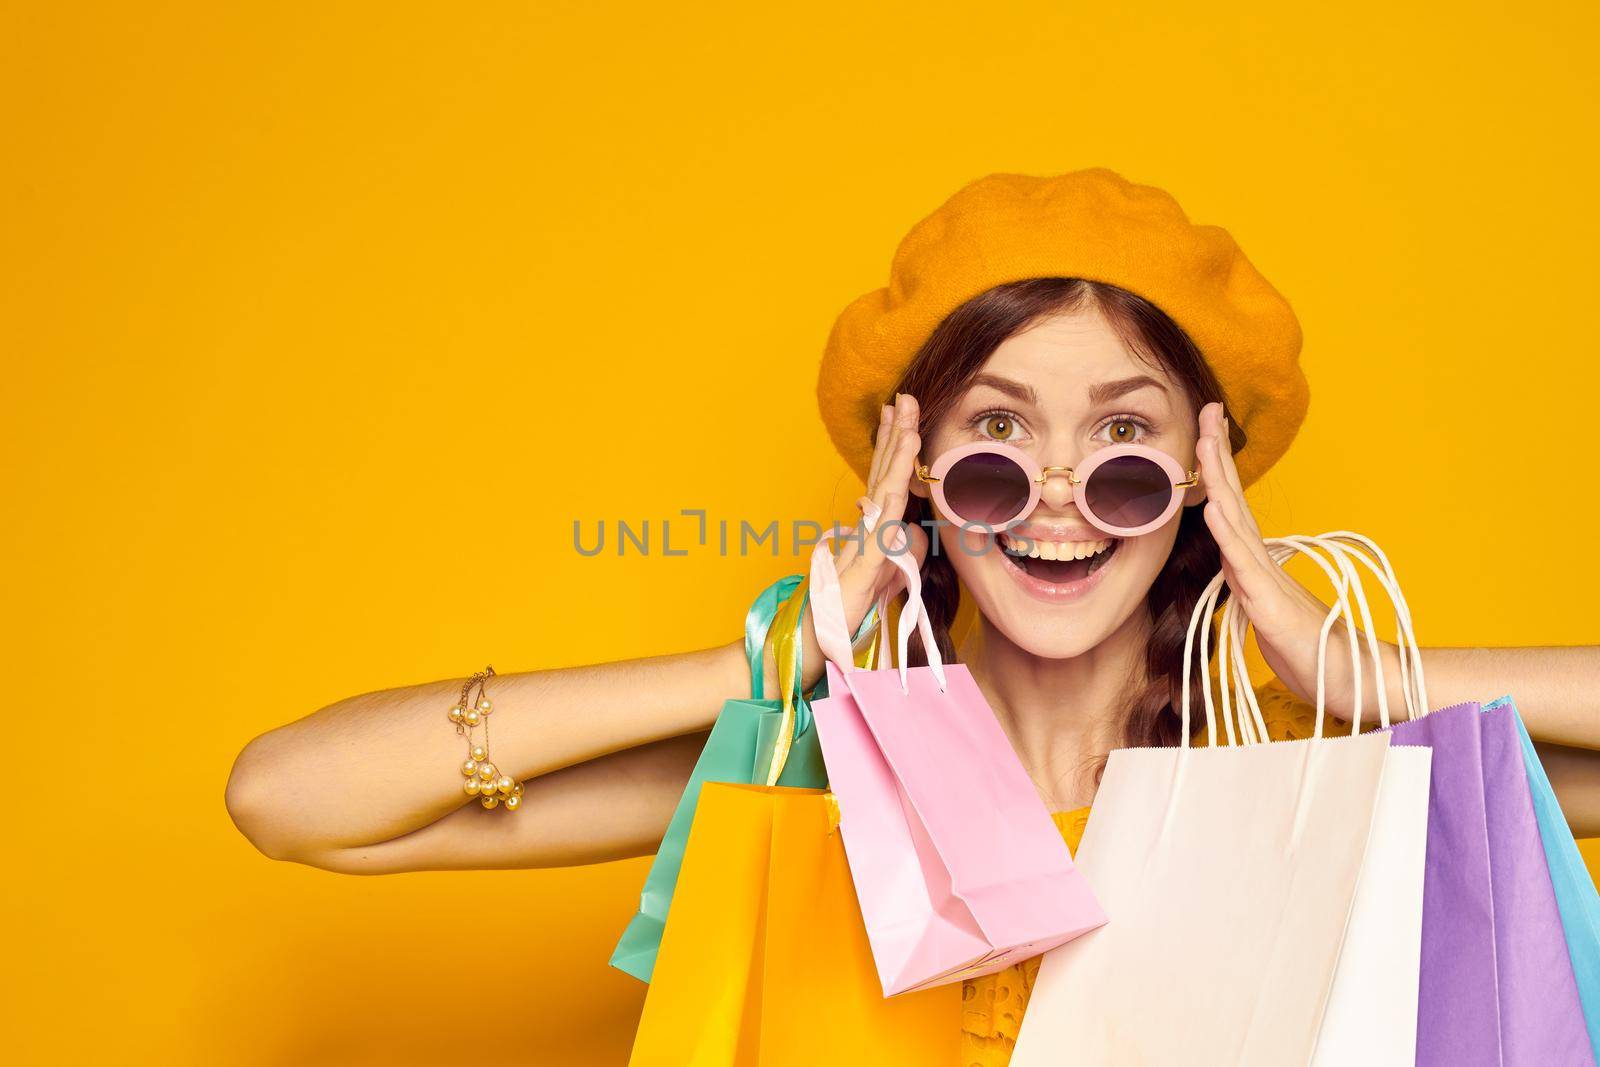 cheerful woman in a yellow hat Shopaholic fashion style studio model by Vichizh